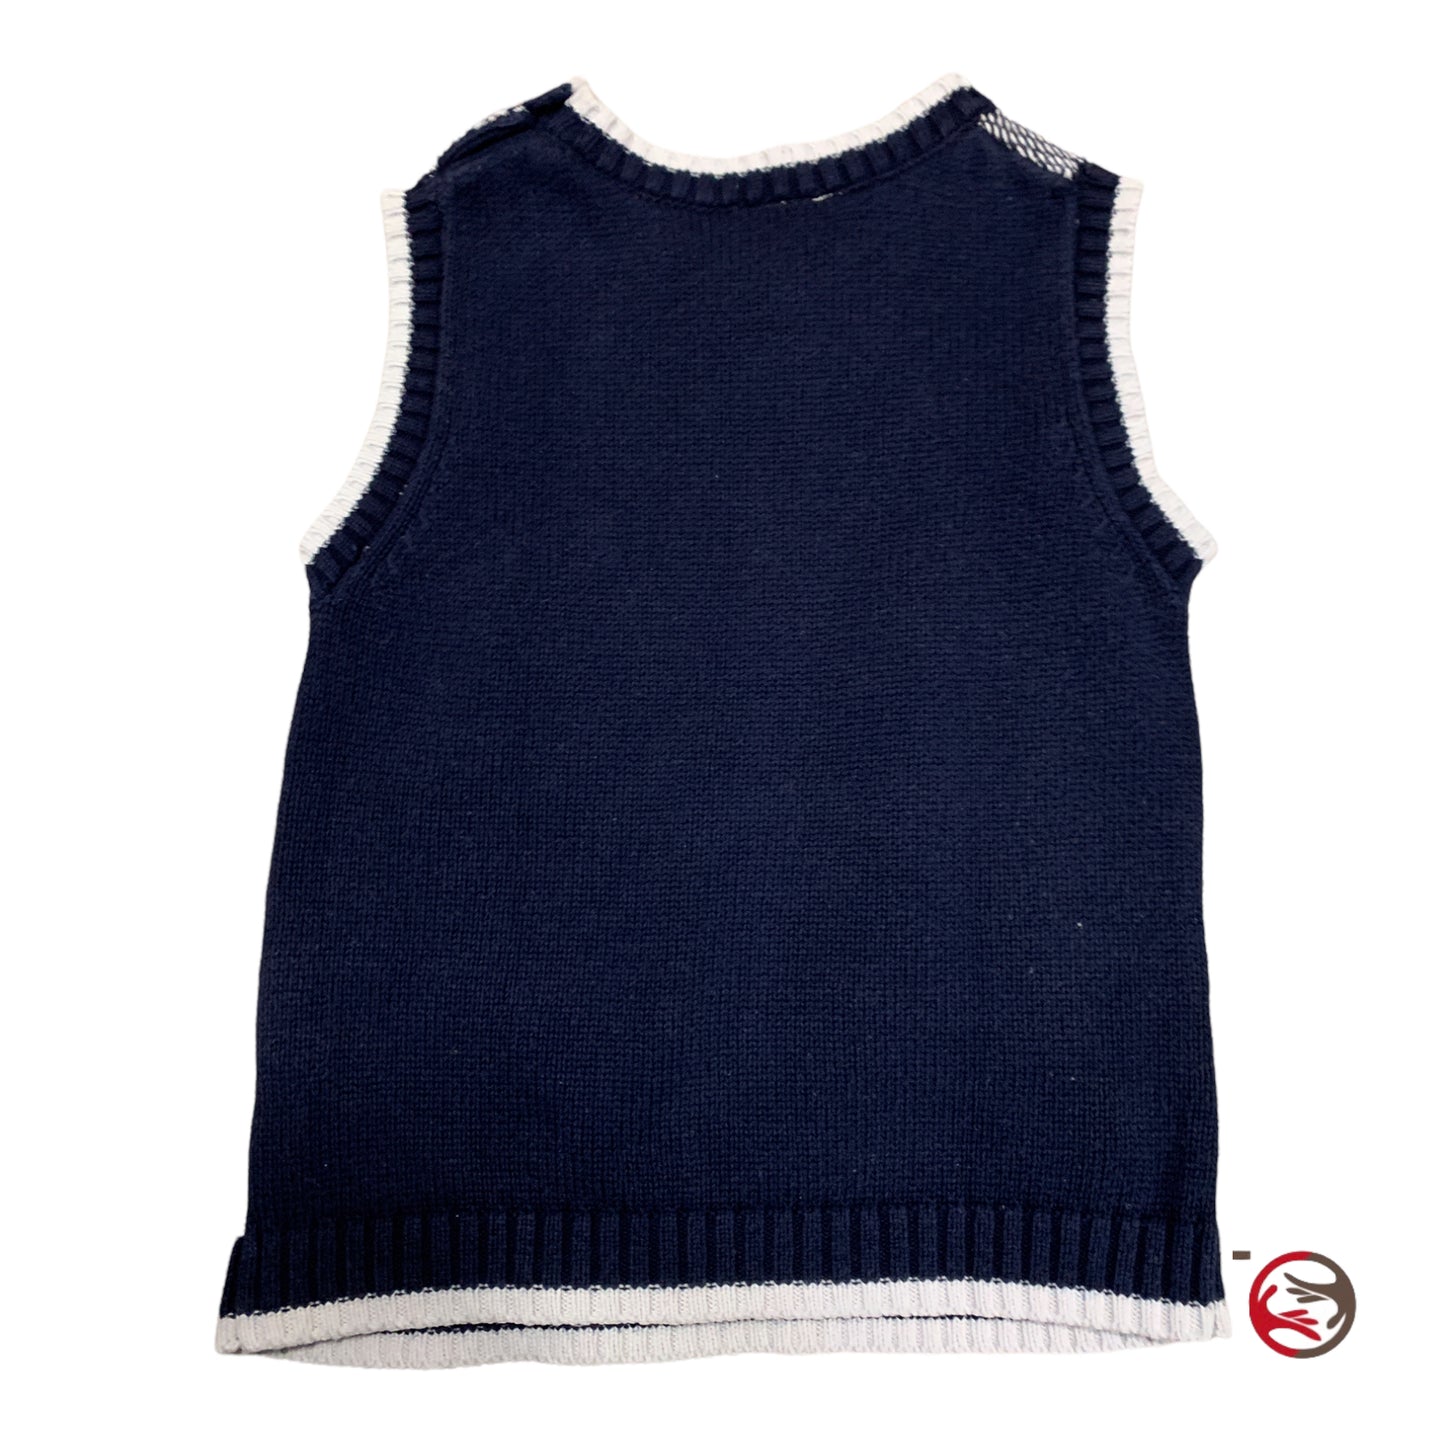 Baby Fagottino vest sweater 18-24 months